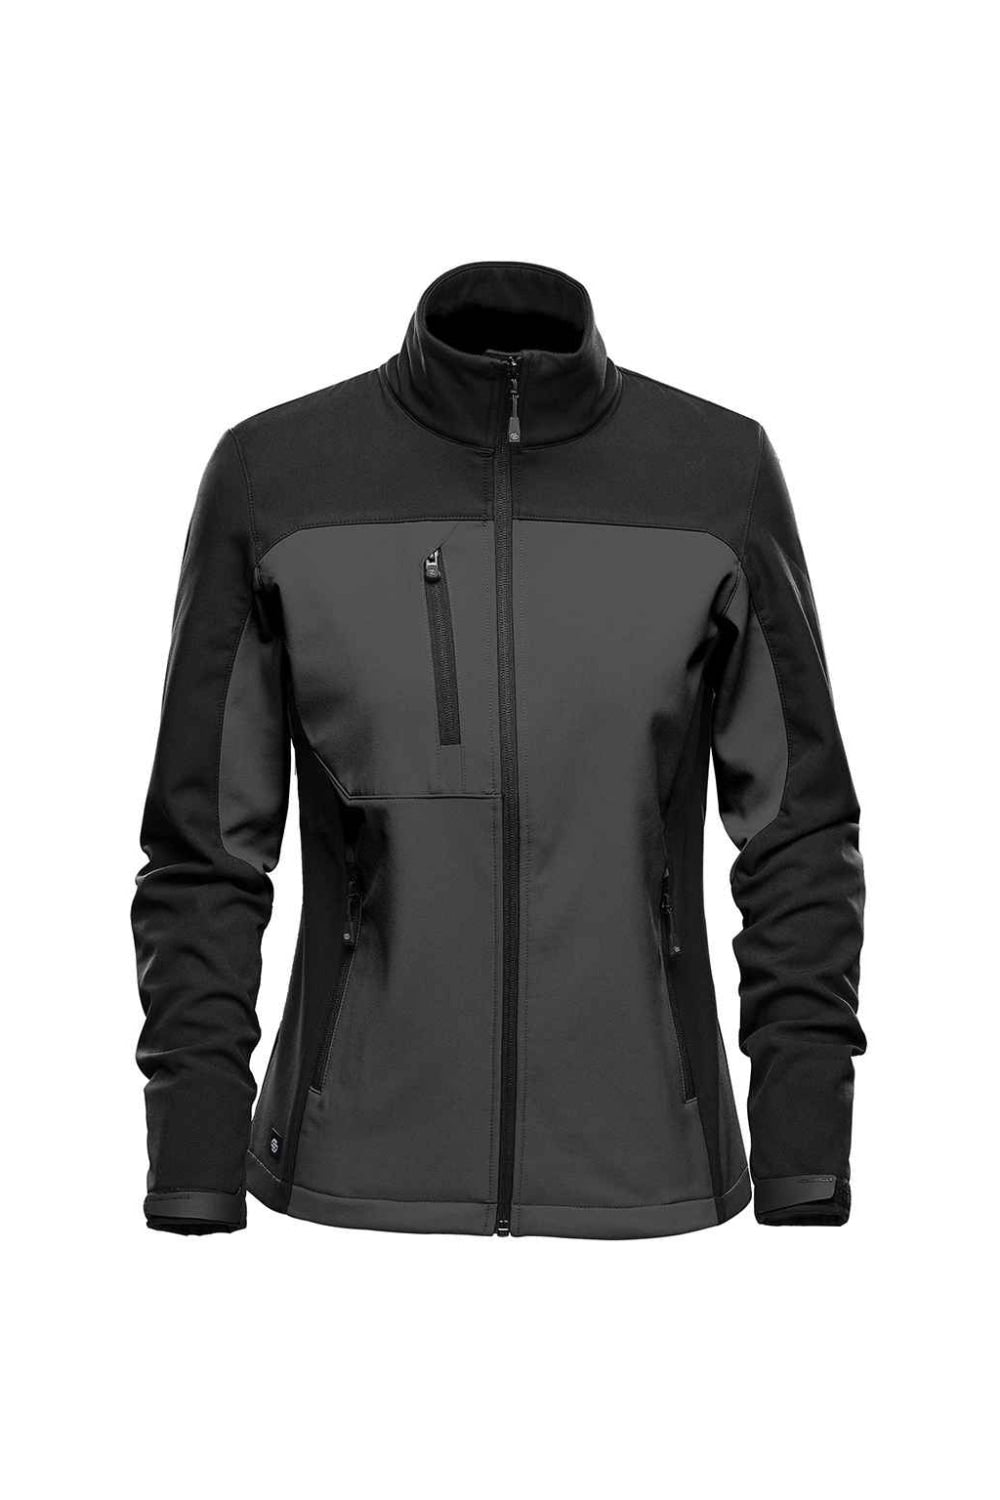 Stormtech Womens/Ladies Cascades Soft Shell Jacket (Dolphin/Black)